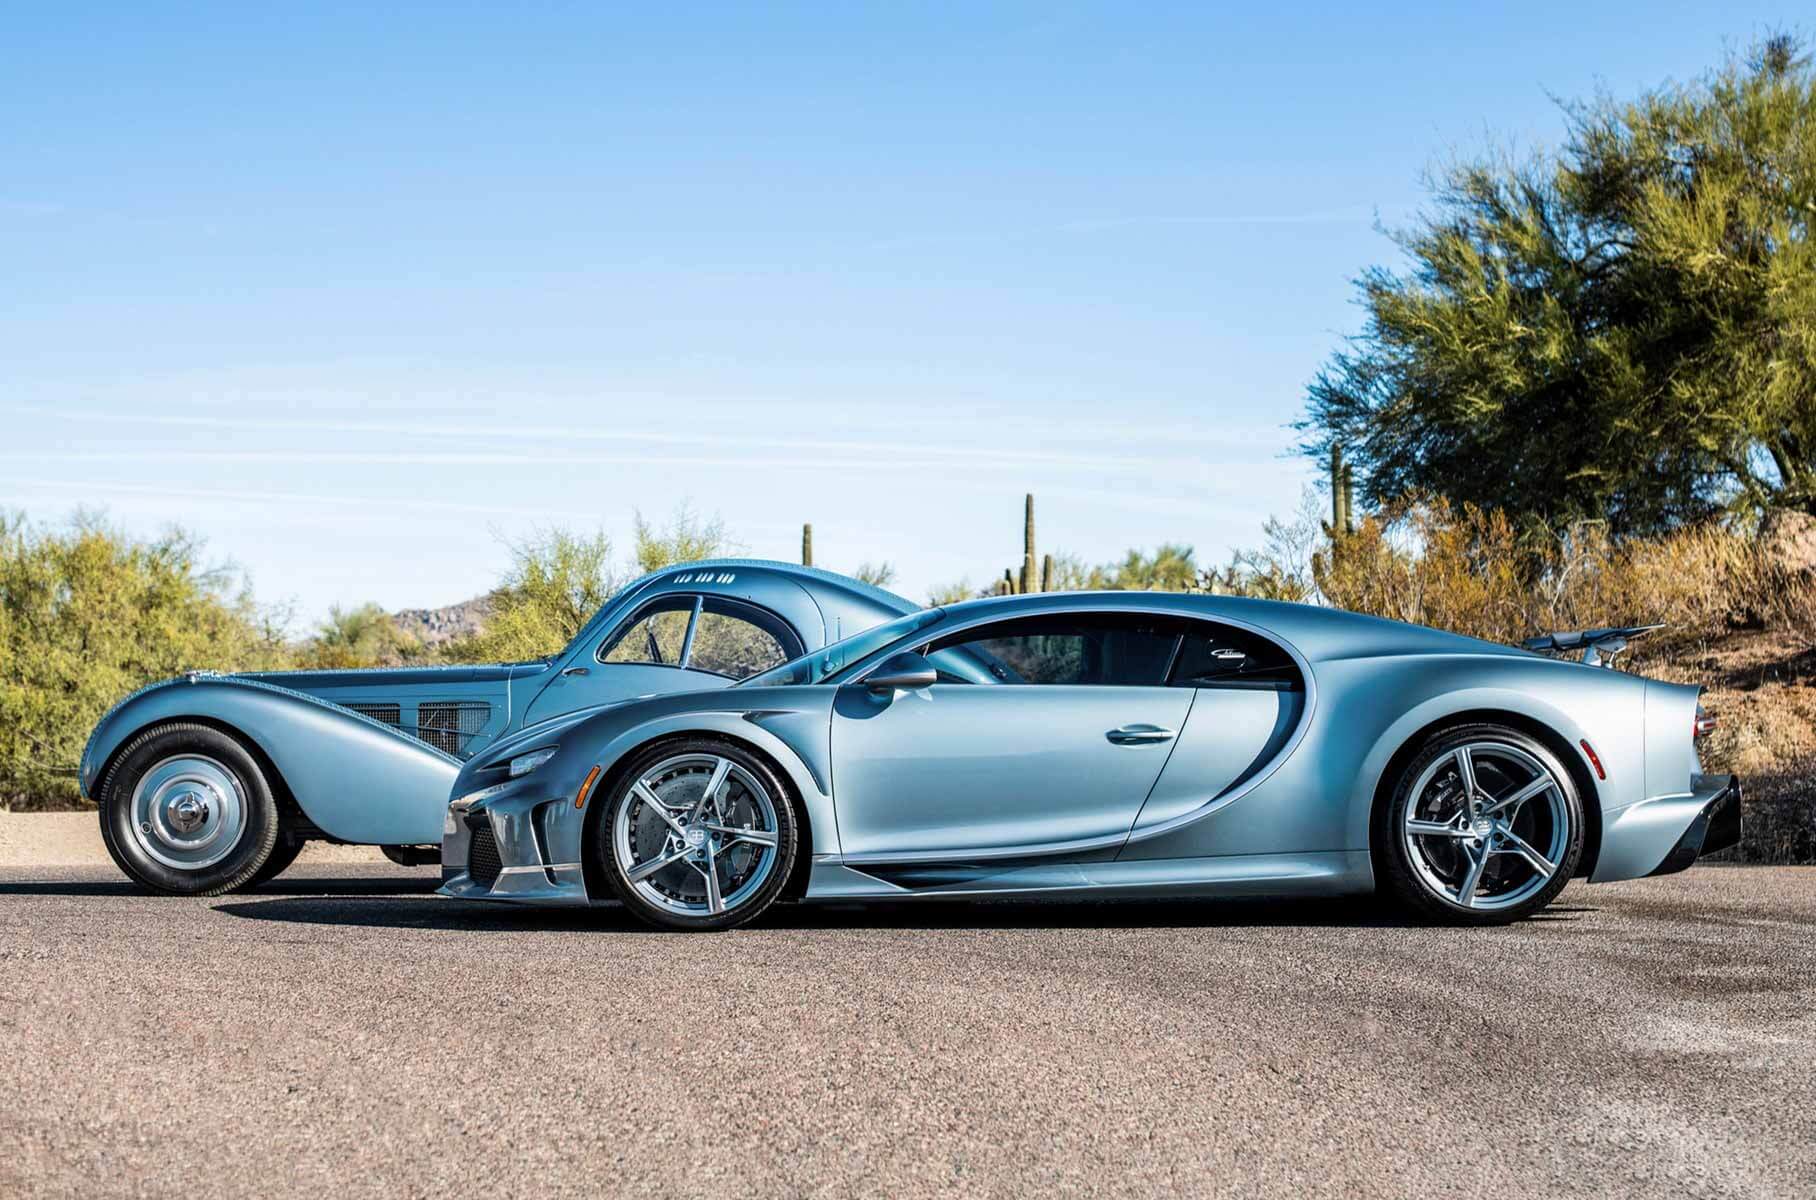 Bugatti показала уникальный Chiron Super Sport на базе купе Type 57 SC Atlantic